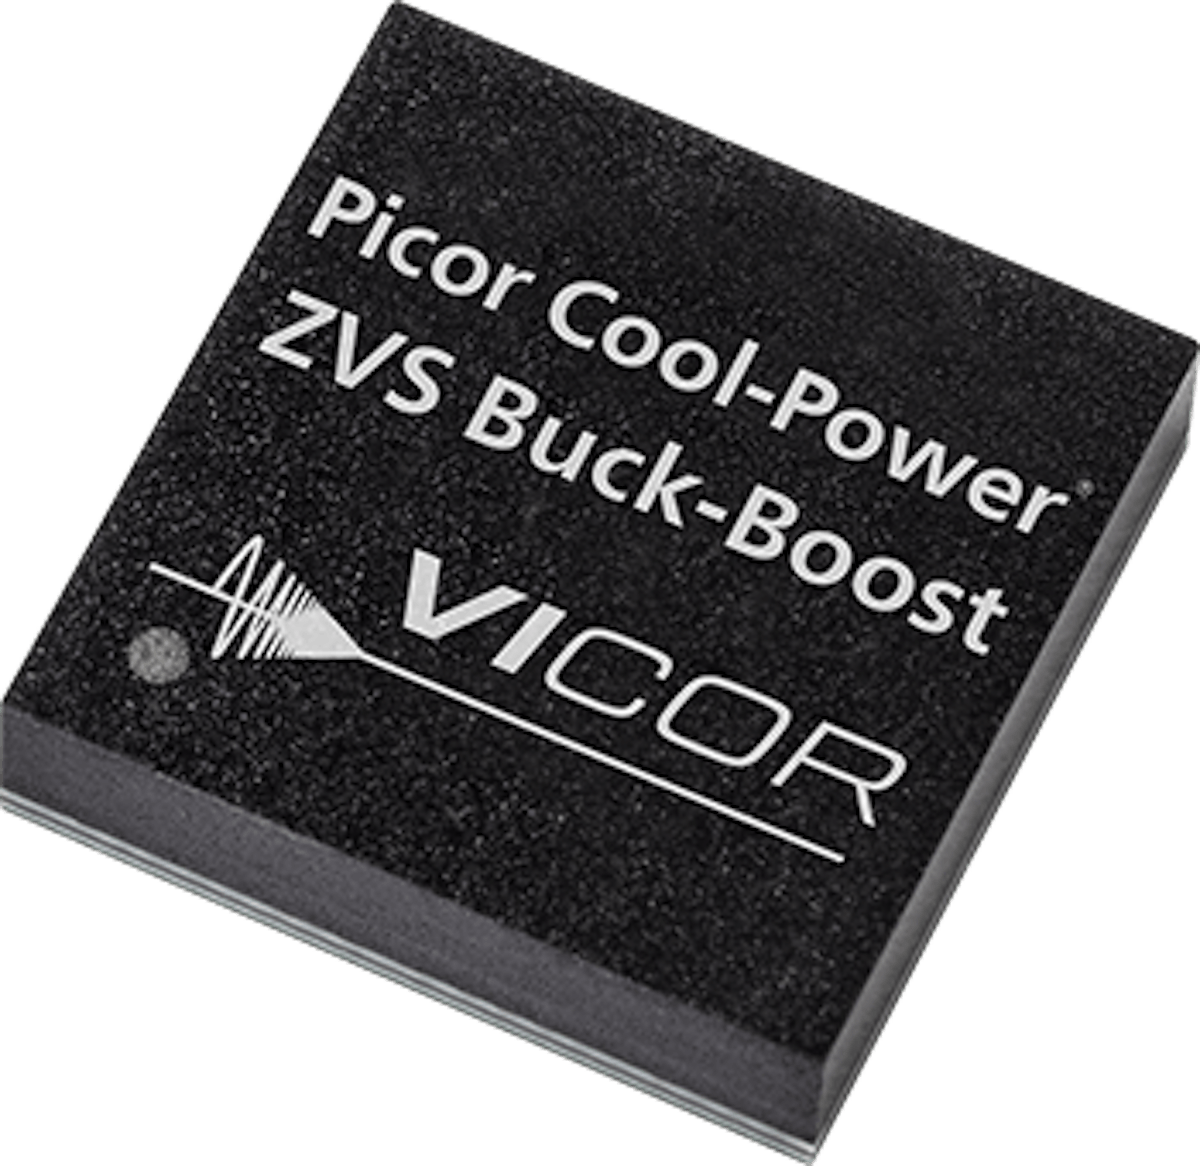 Media Alert  Vicor Power Systems introduces VITA 62 compliant